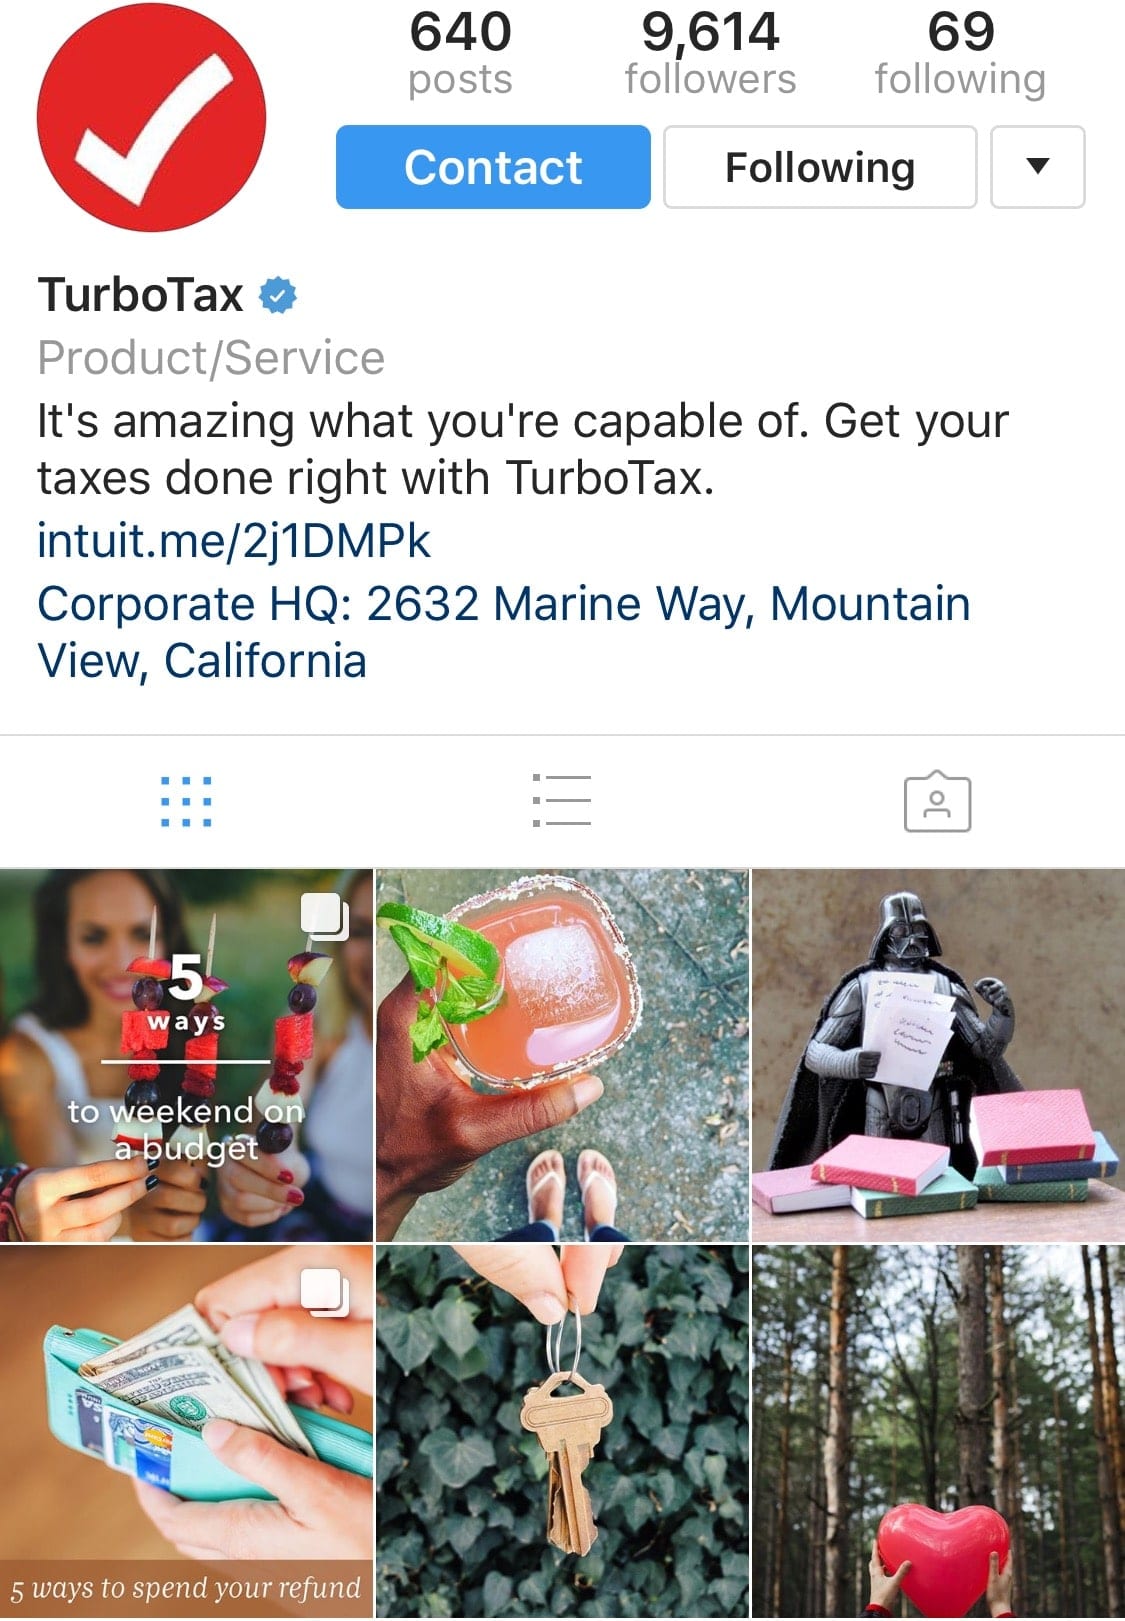 TurboTax Instagram Page - Social Media